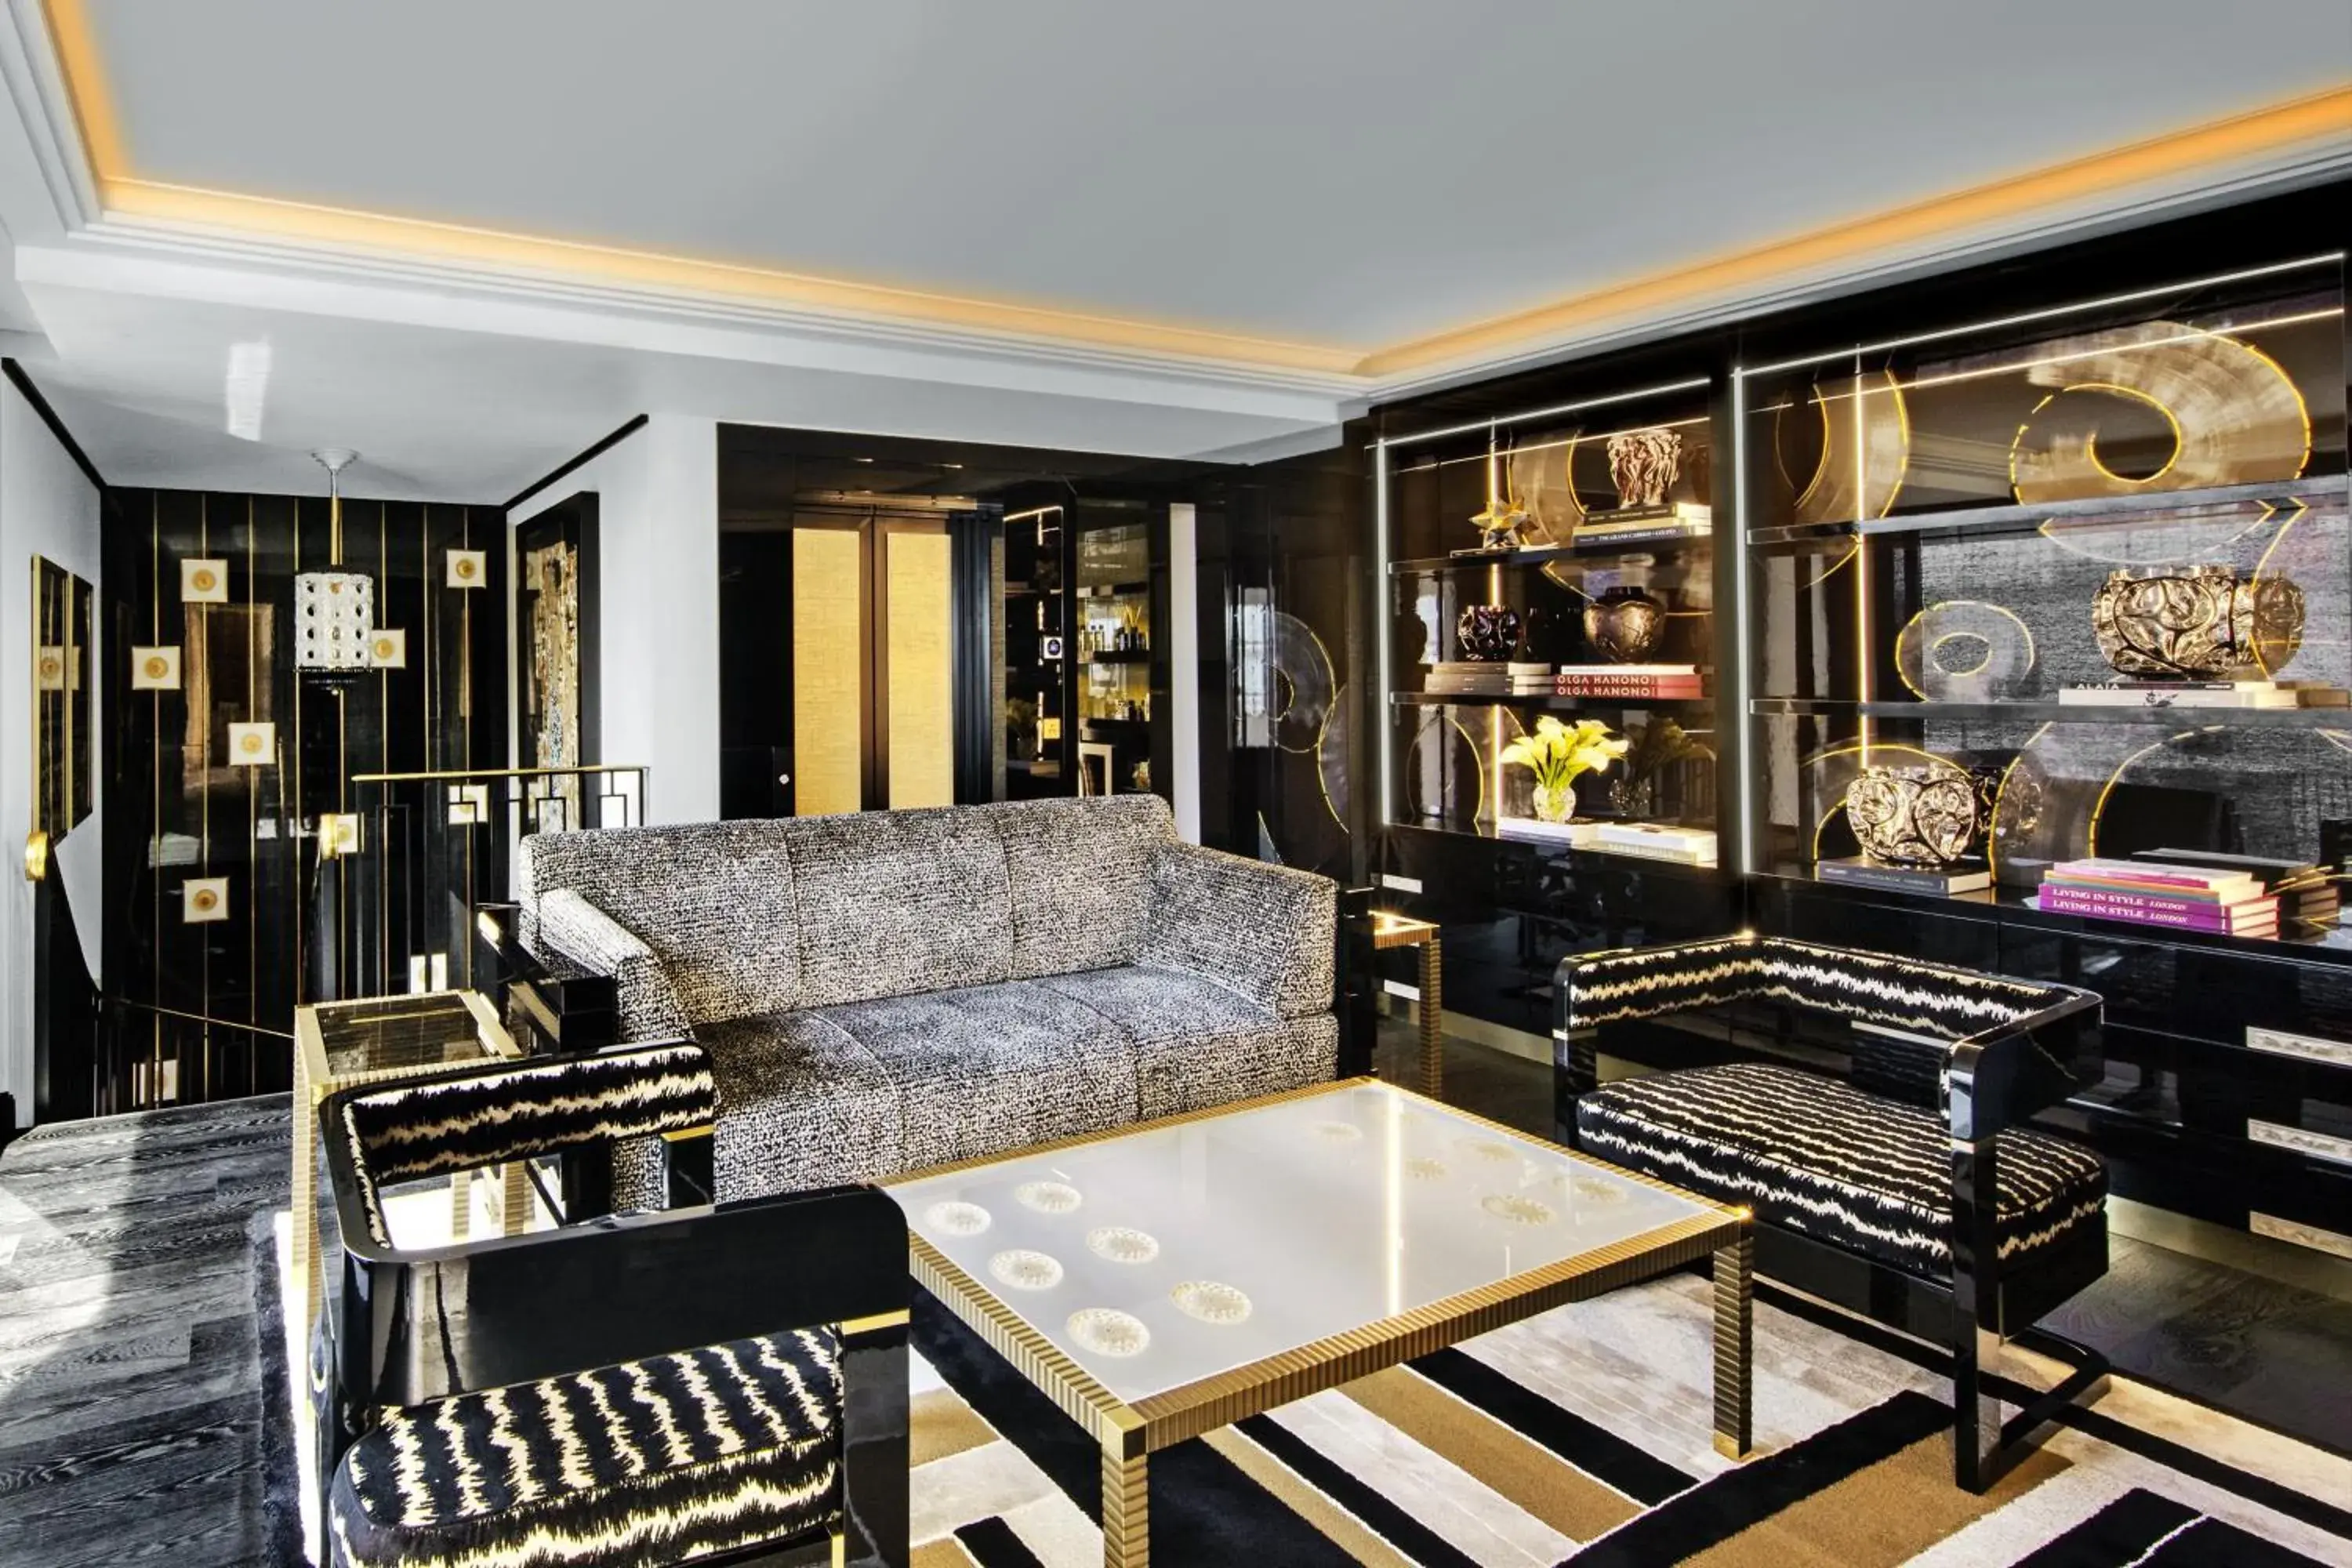 Bedroom, Lounge/Bar in Prince de Galles, a Luxury Collection hotel, Paris